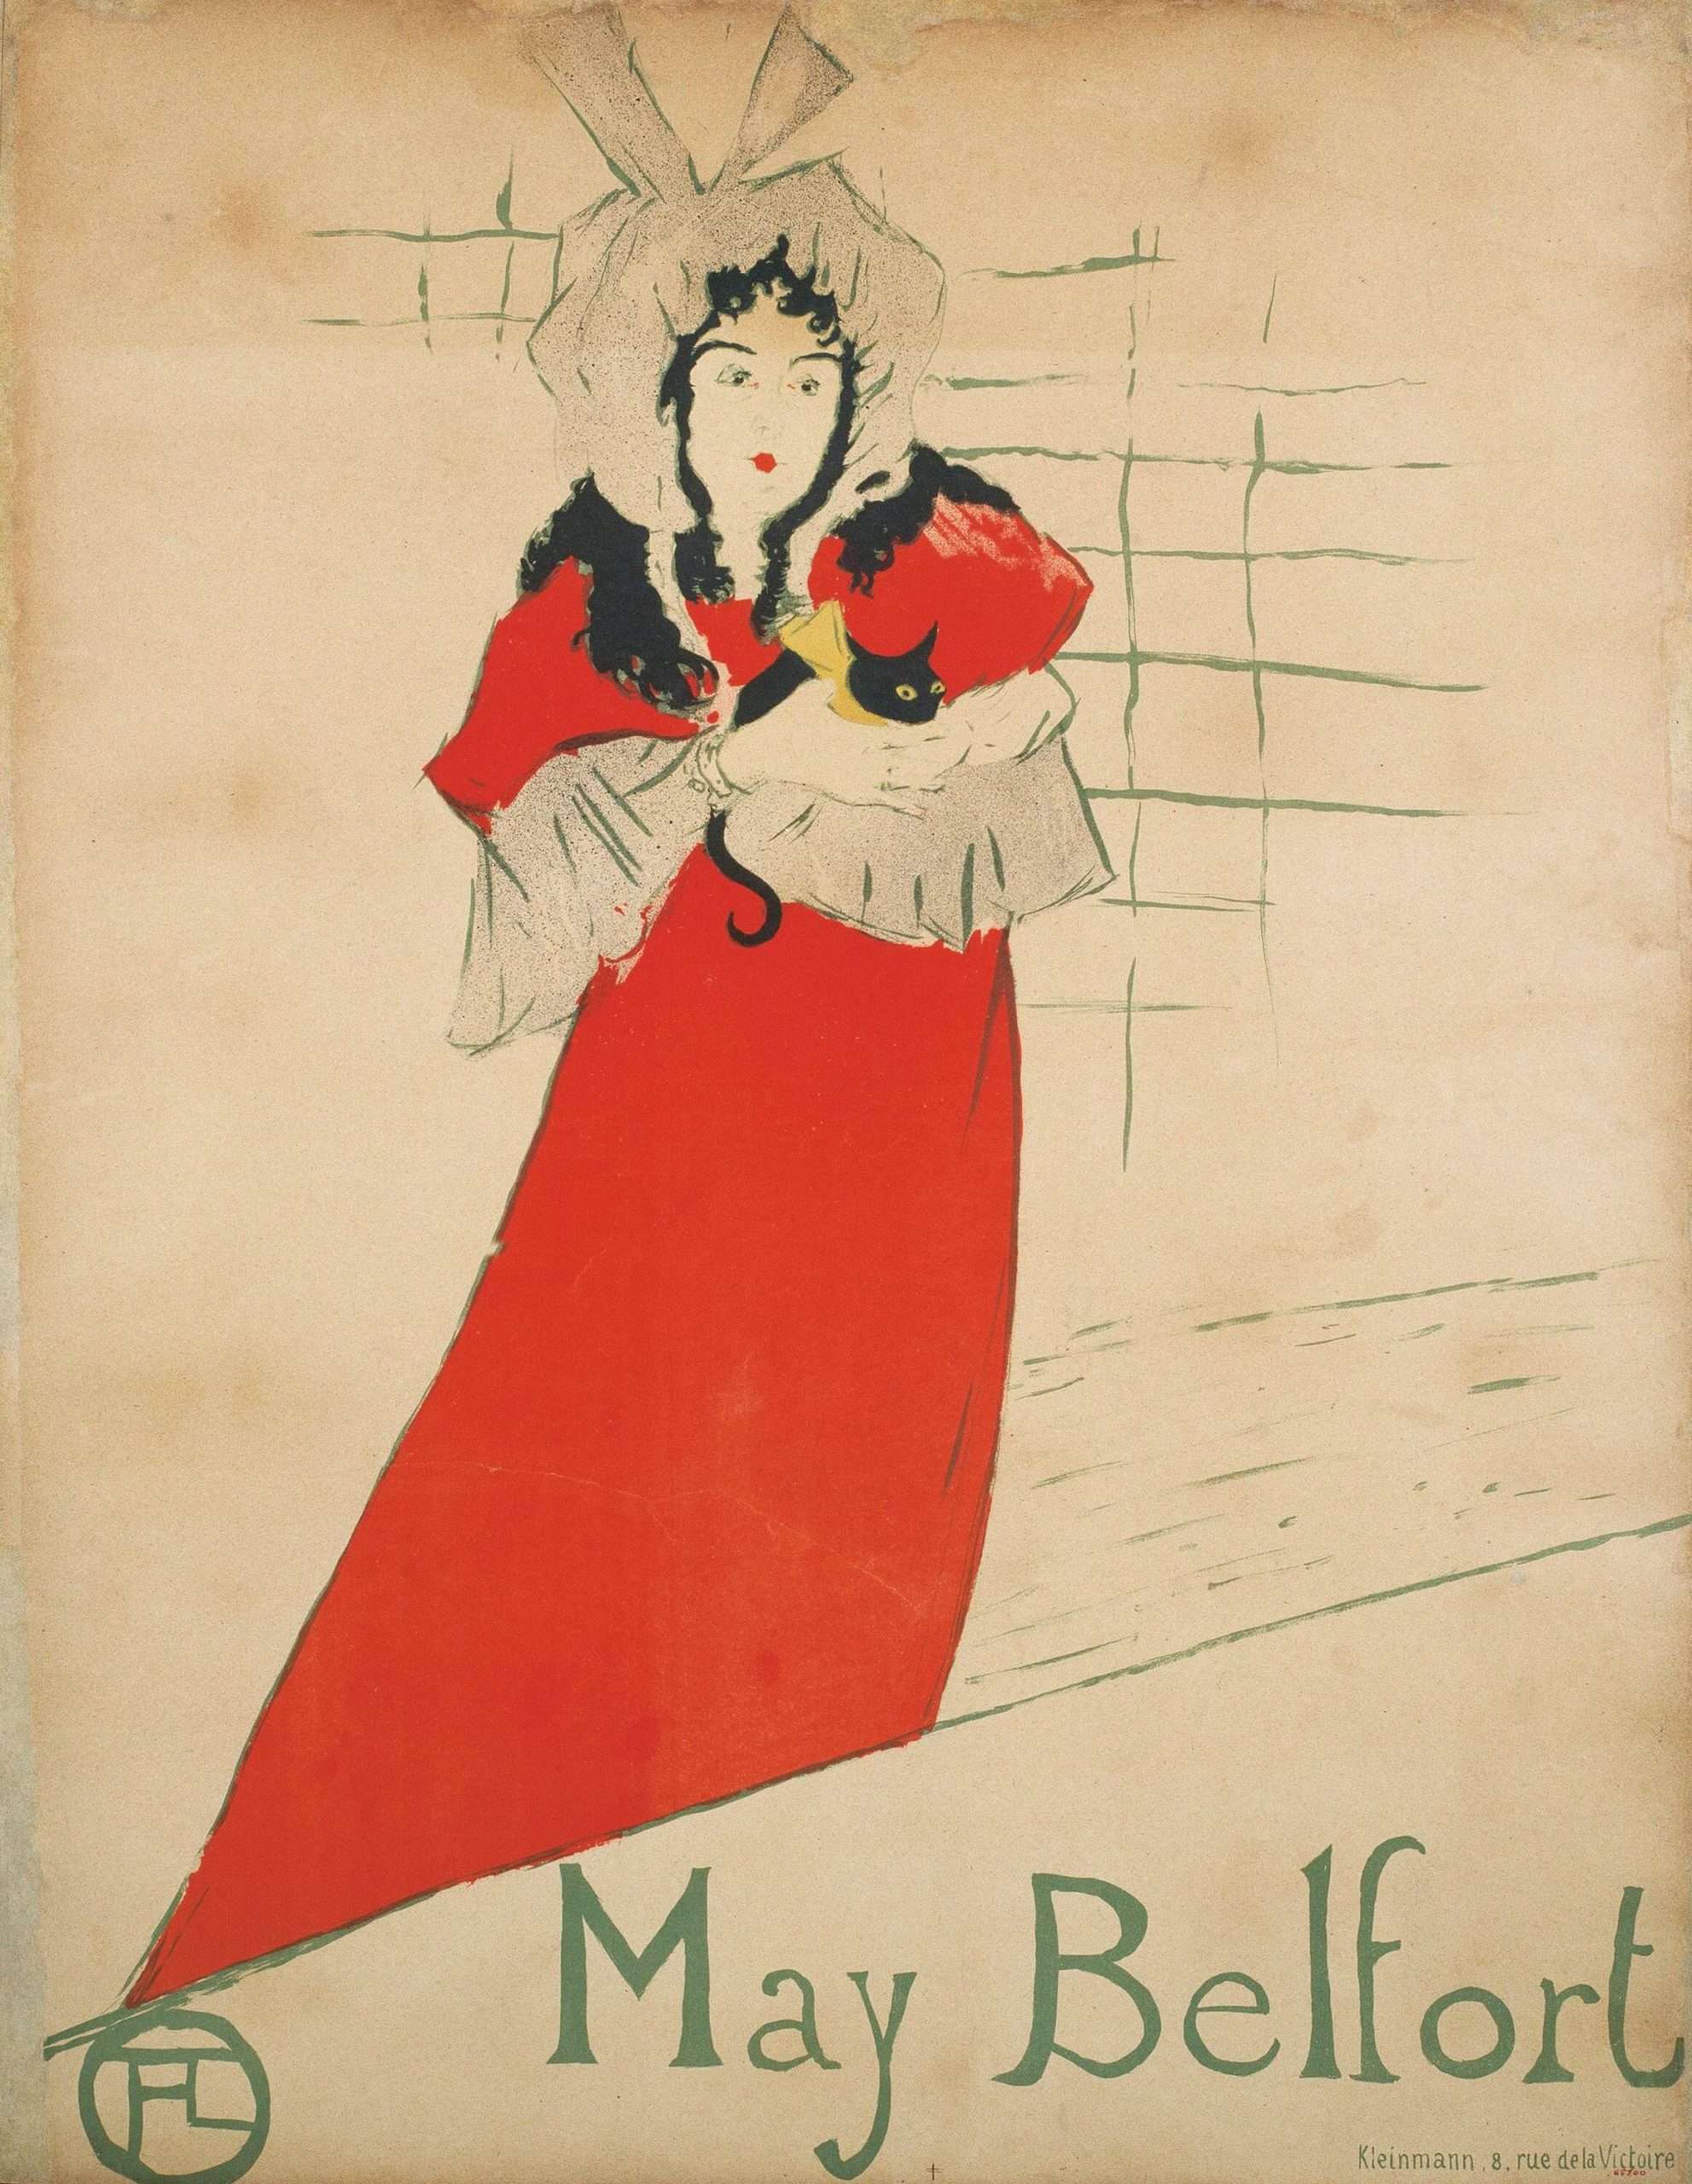 Obras del impresionismo - May Belfort - Lautrec